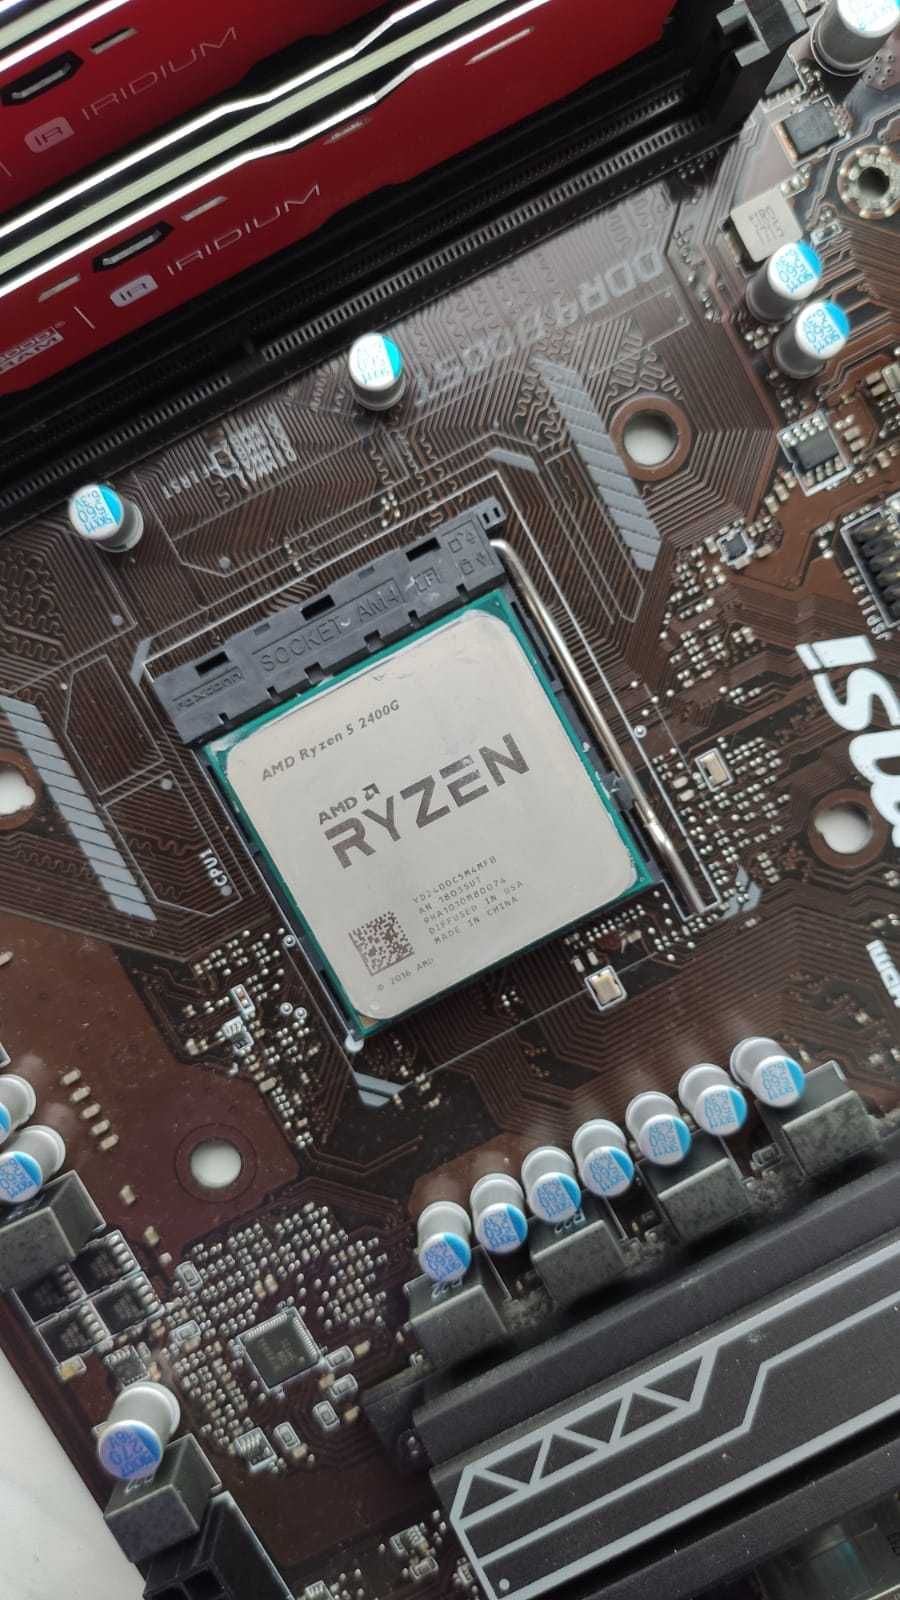 PROCESOR AMD RYZEN 5 2400G 3,6 GHz 4 rdzenie Vega 11